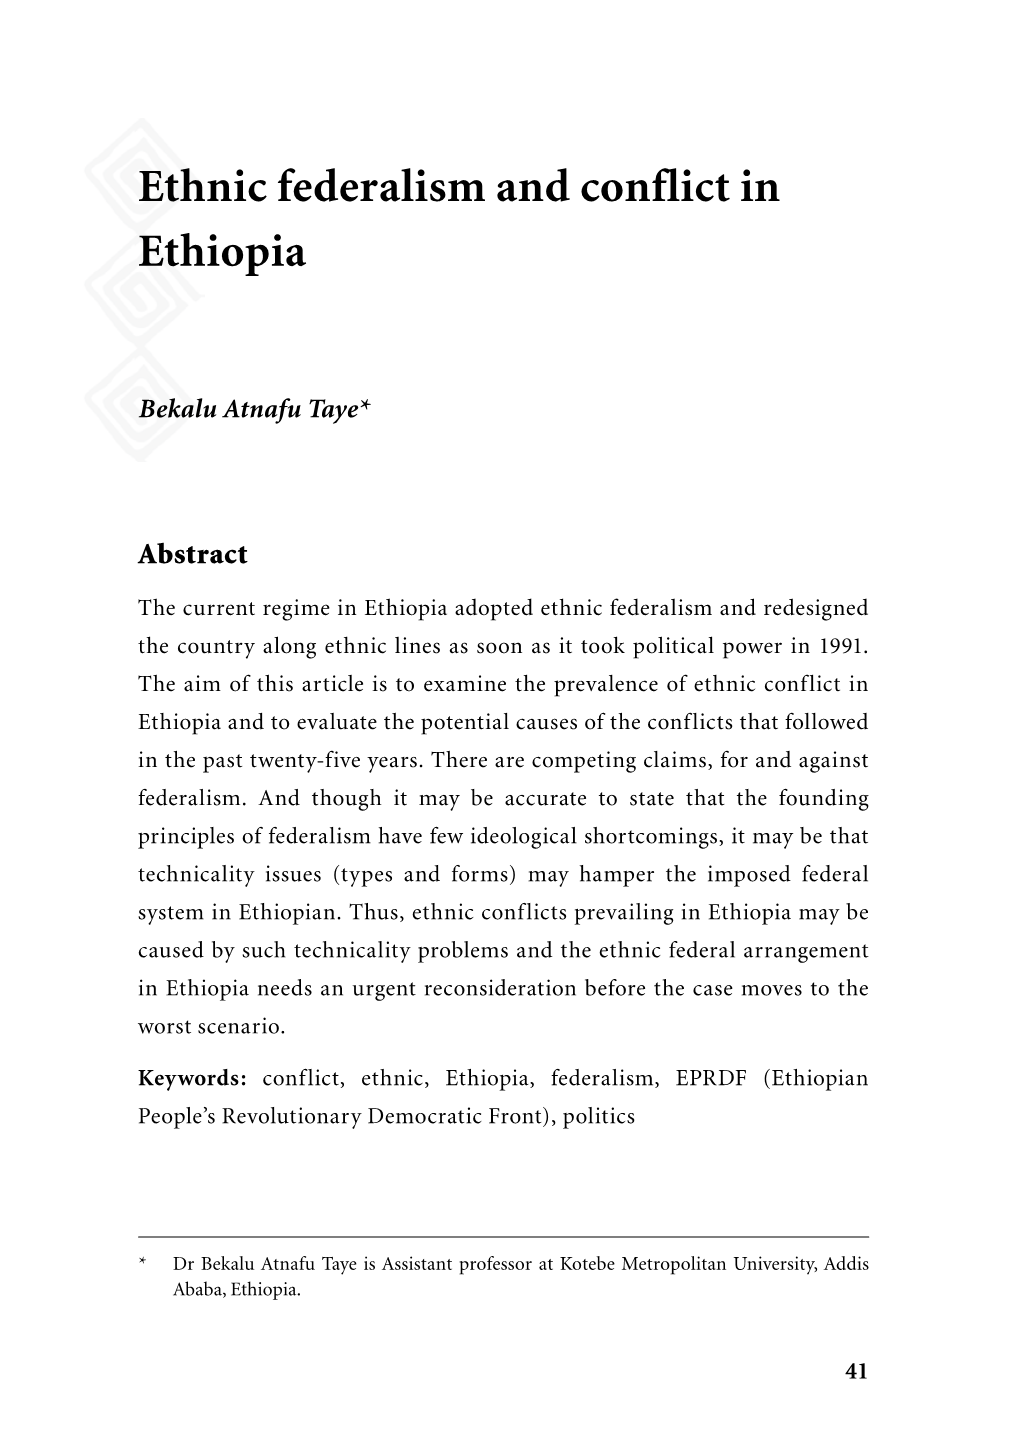 Ethnic Federalism and Conflict in Ethiopia